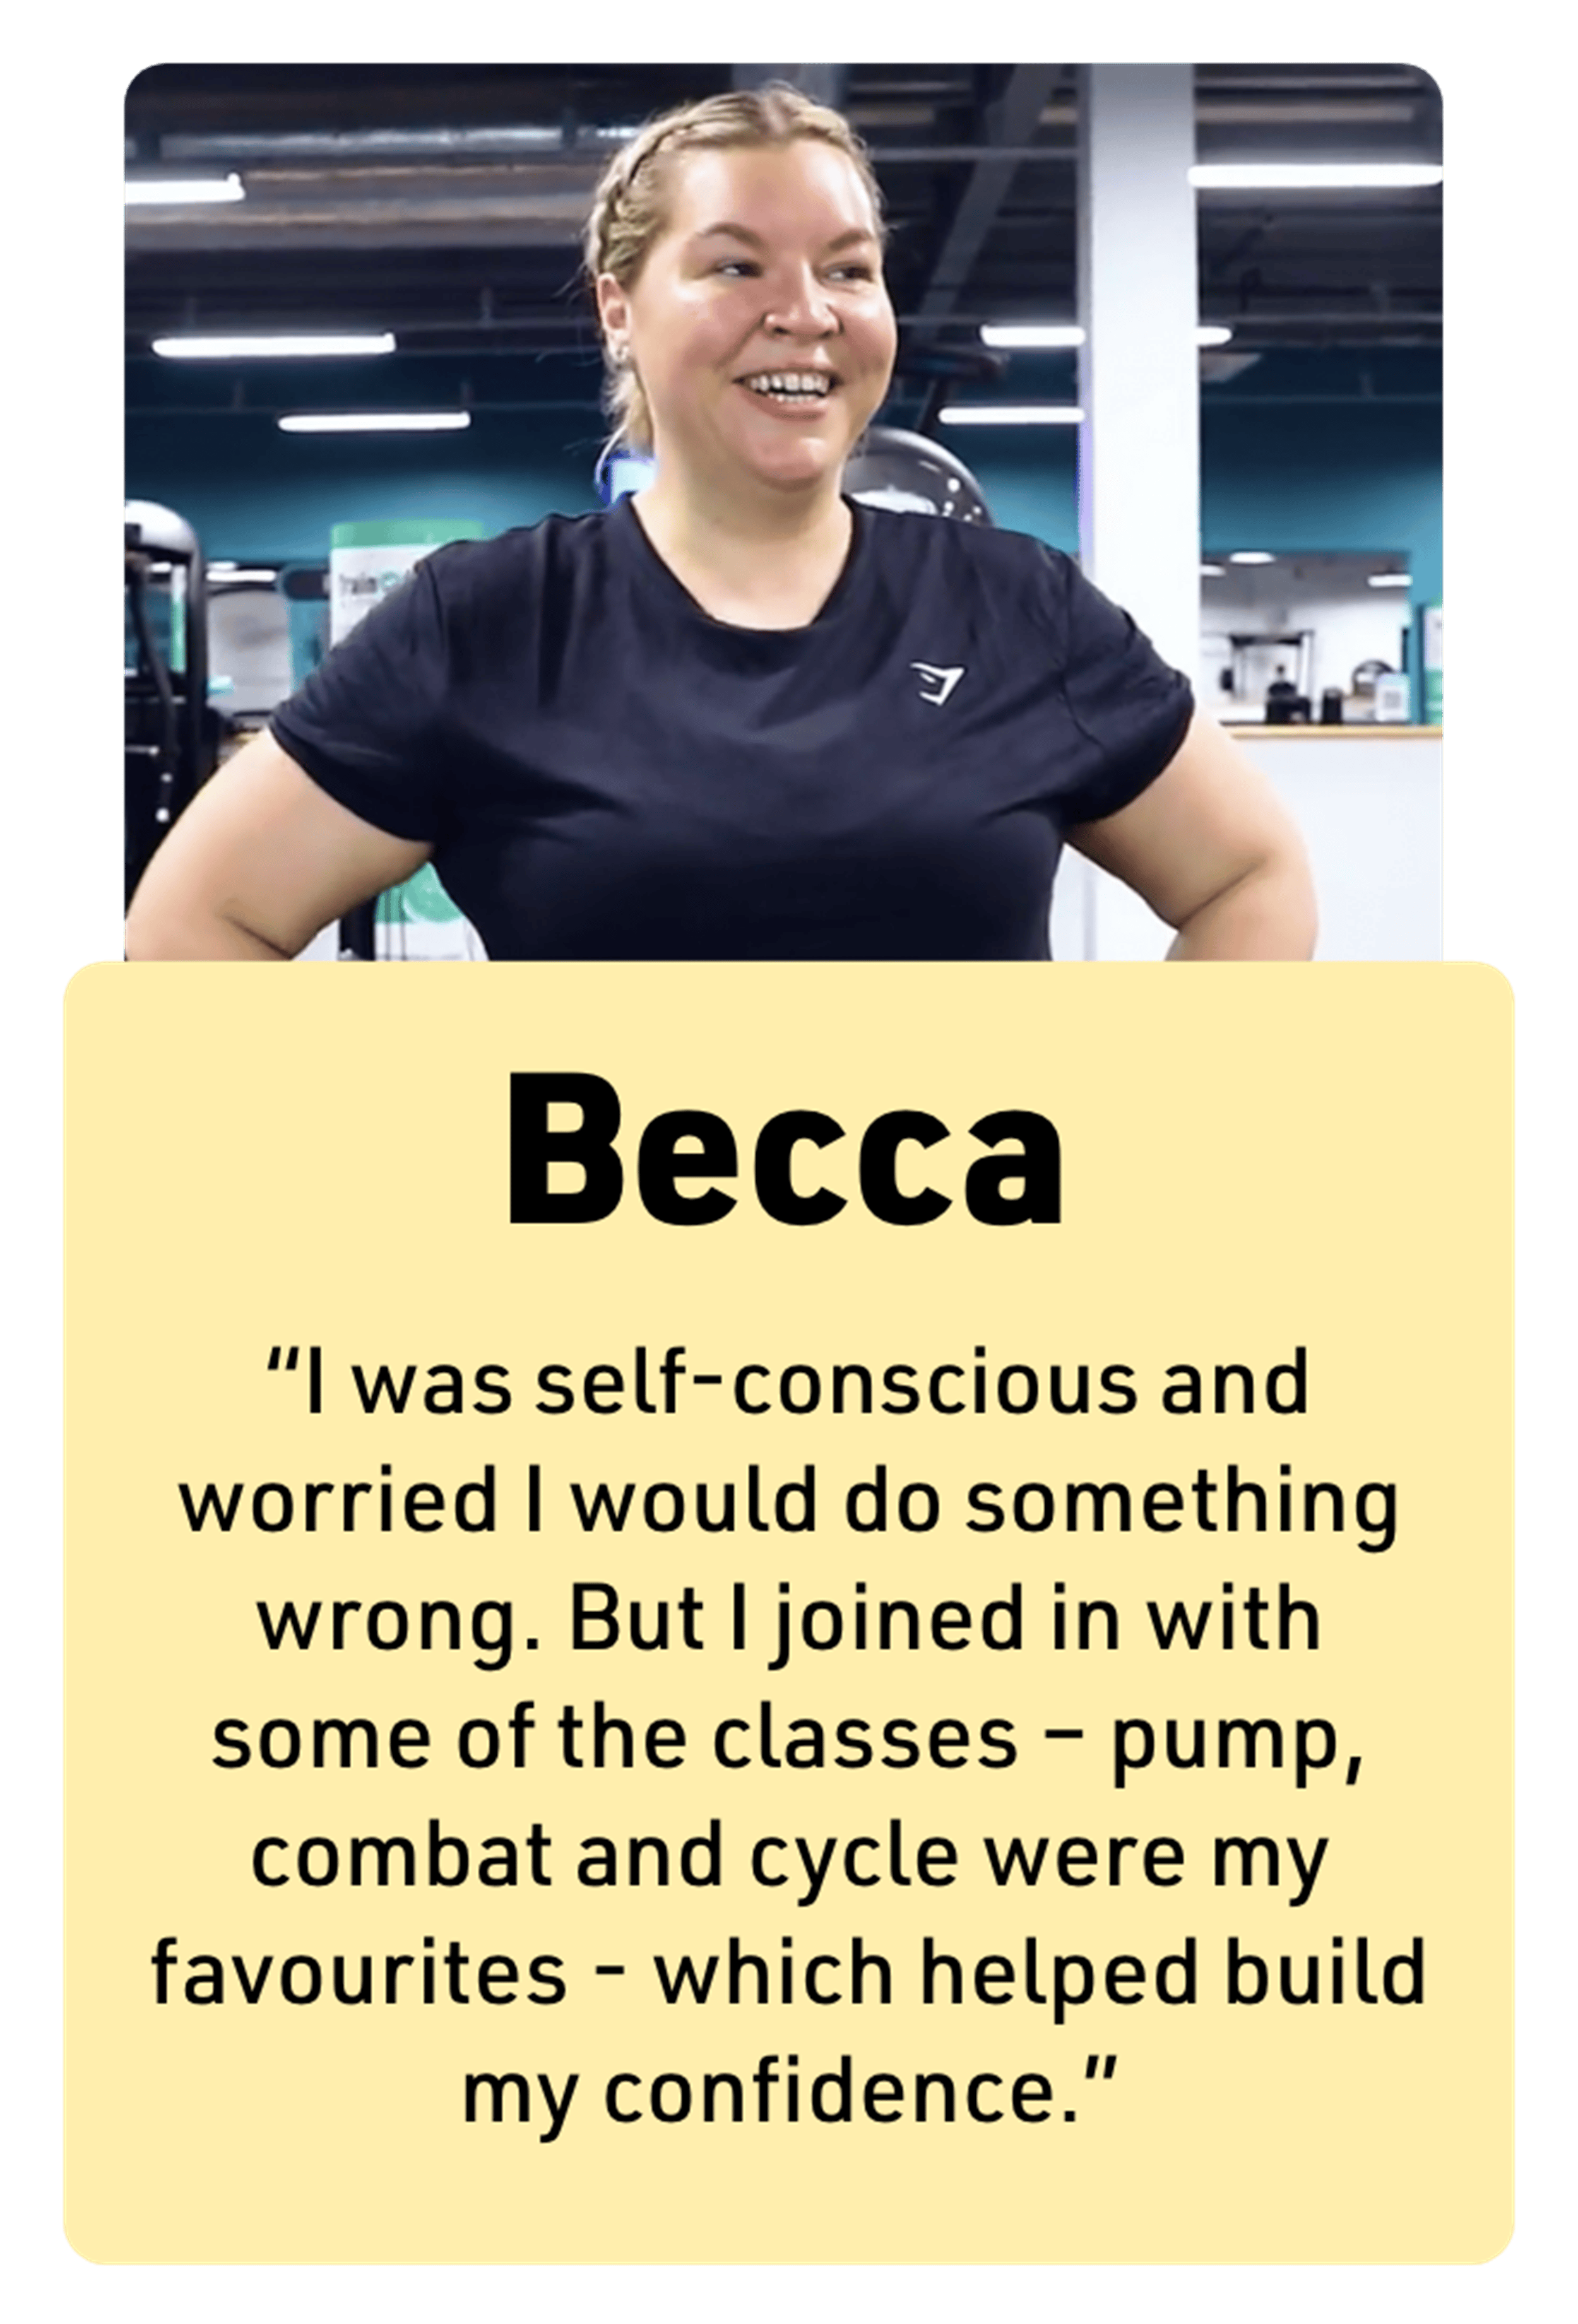 Becca's story